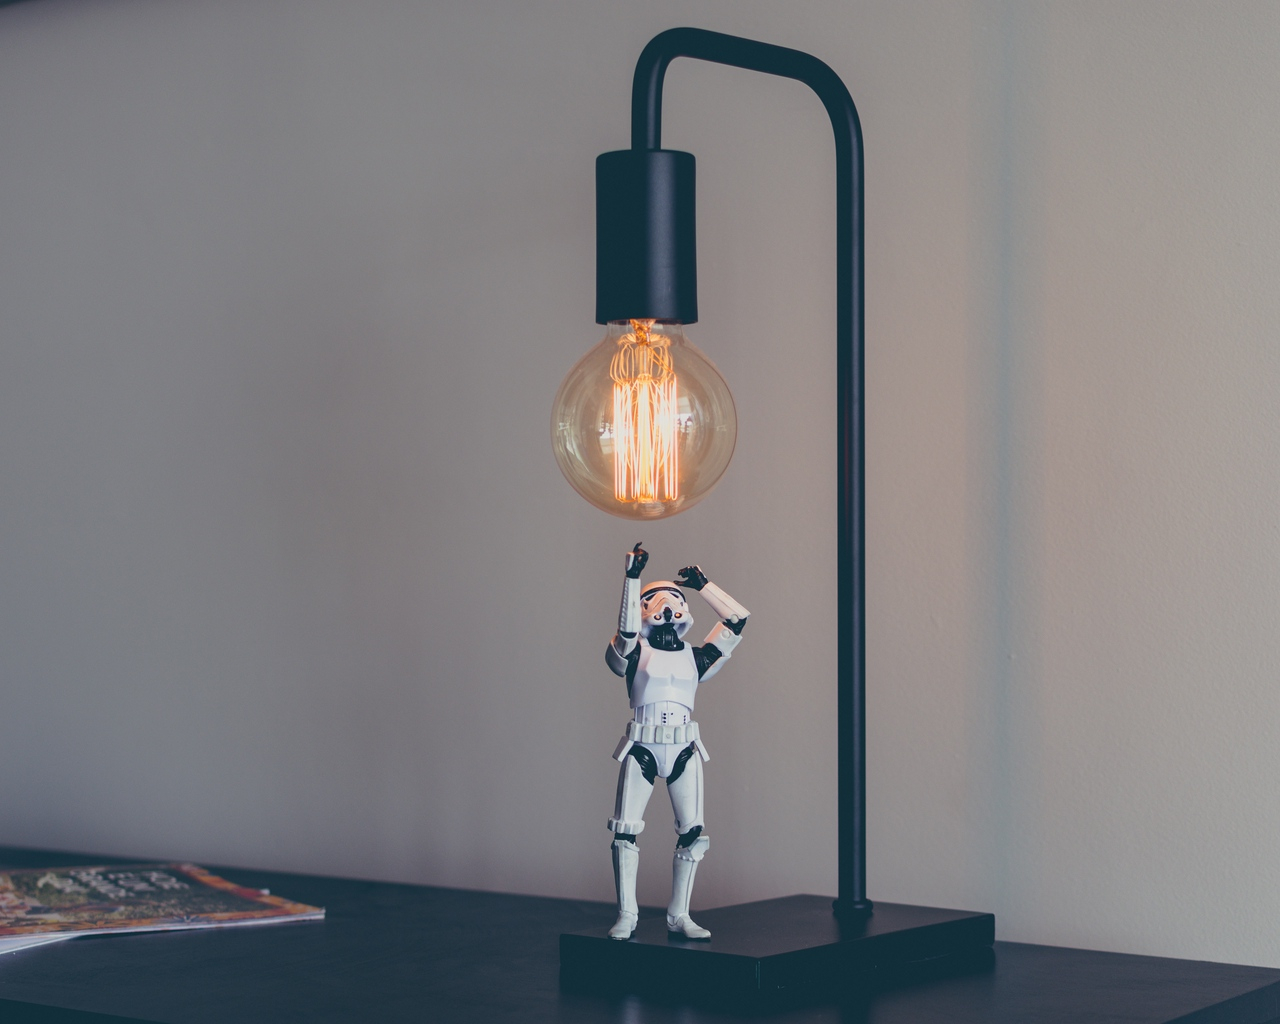 Download Wallpaper 1280x1024 Stormtrooper Star Wars Lamp in proportions 1280 X 1024